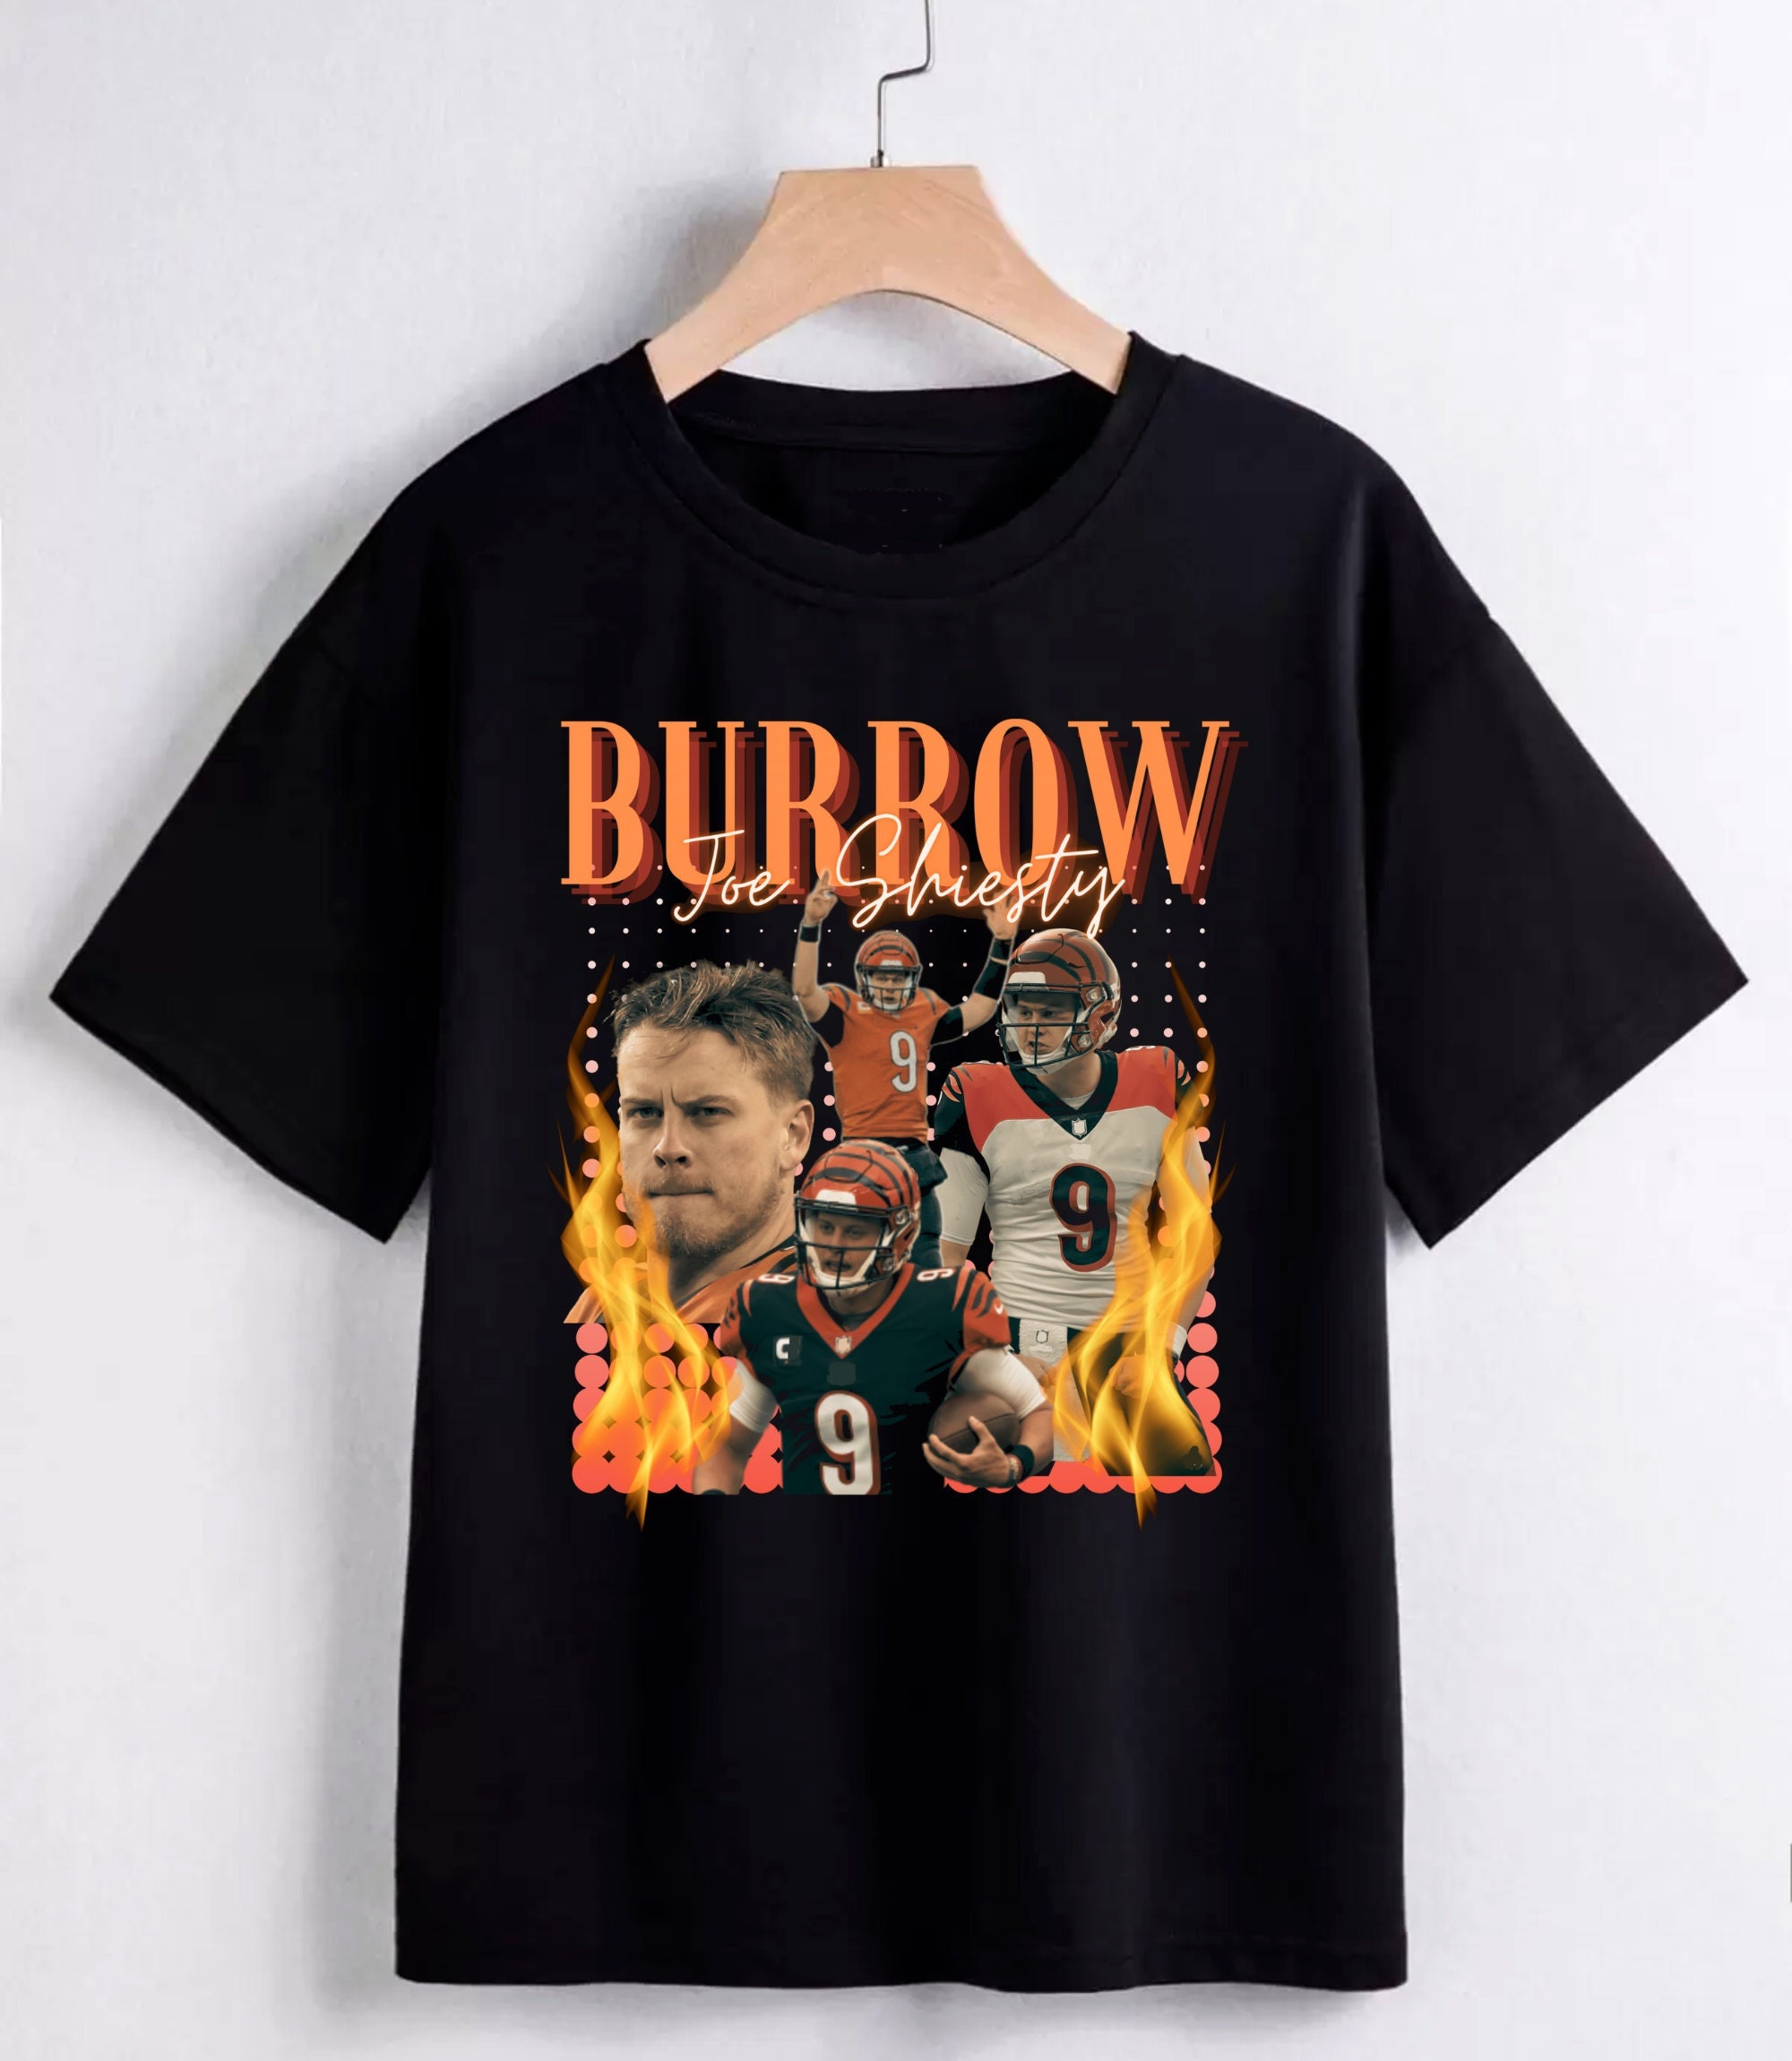 Discover Shirt, Joe Burrow Tee, Trendy 90s style shirt